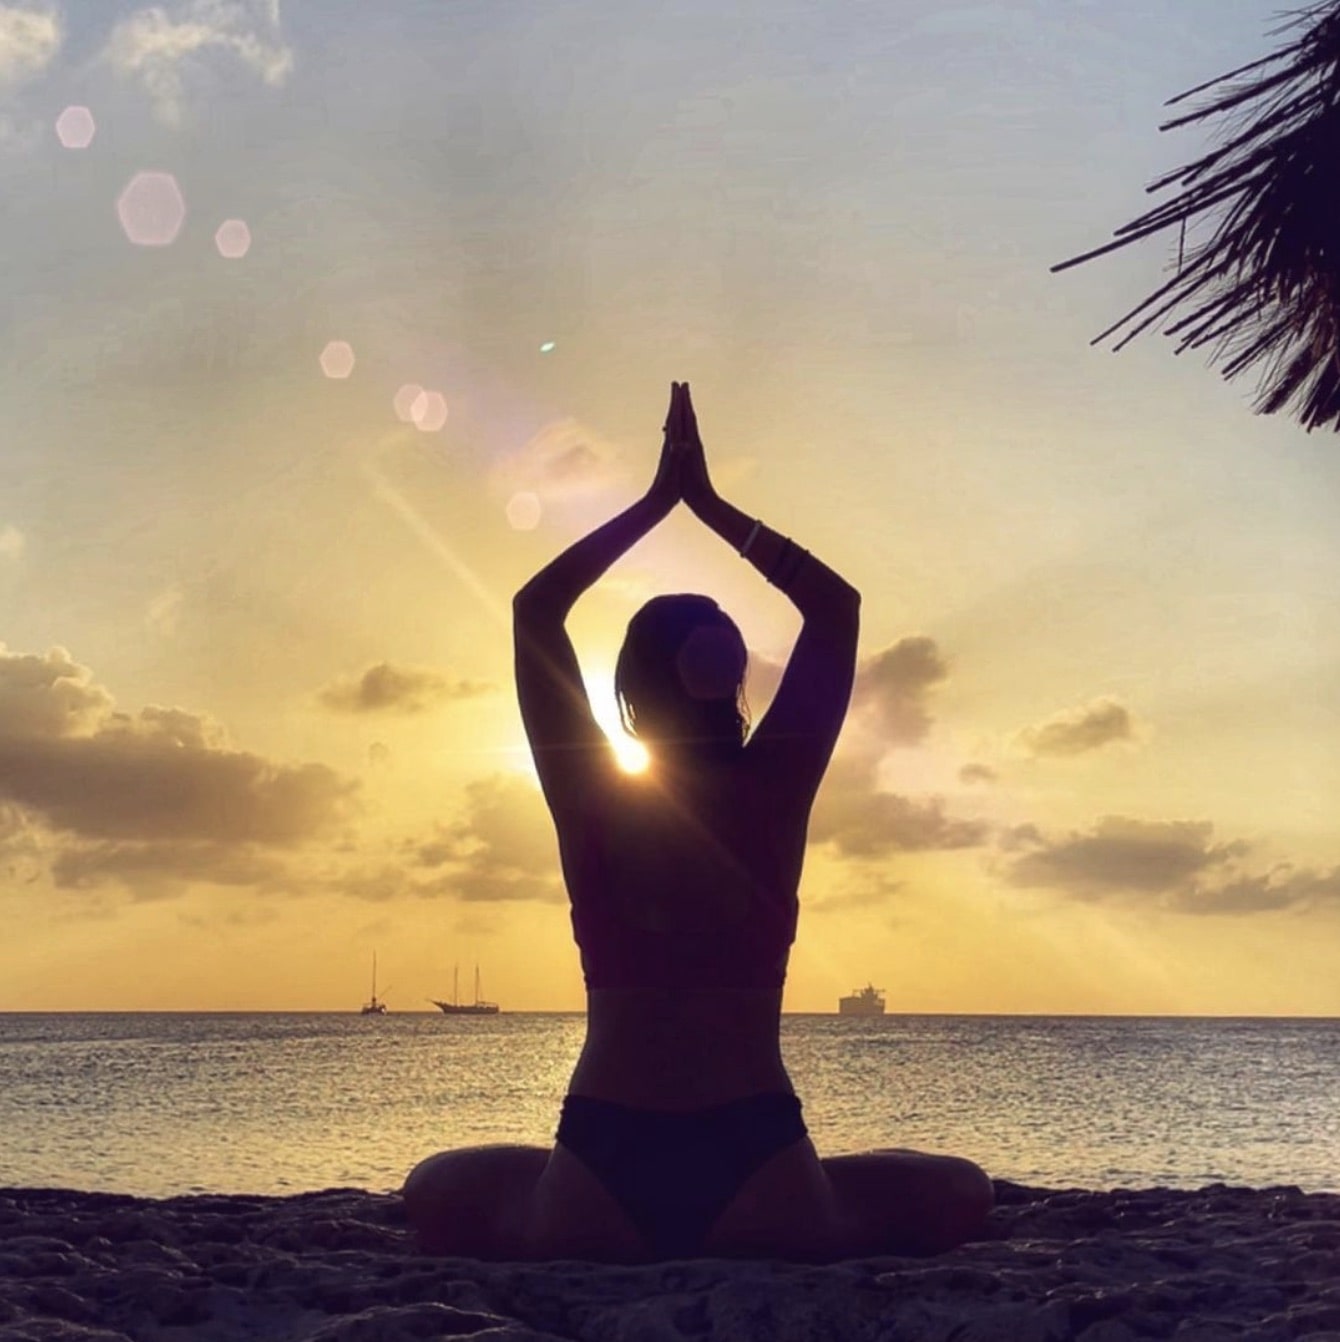 Yoga-Girl-Podcast-Rachel-Beach-Sunset-Nature-Image